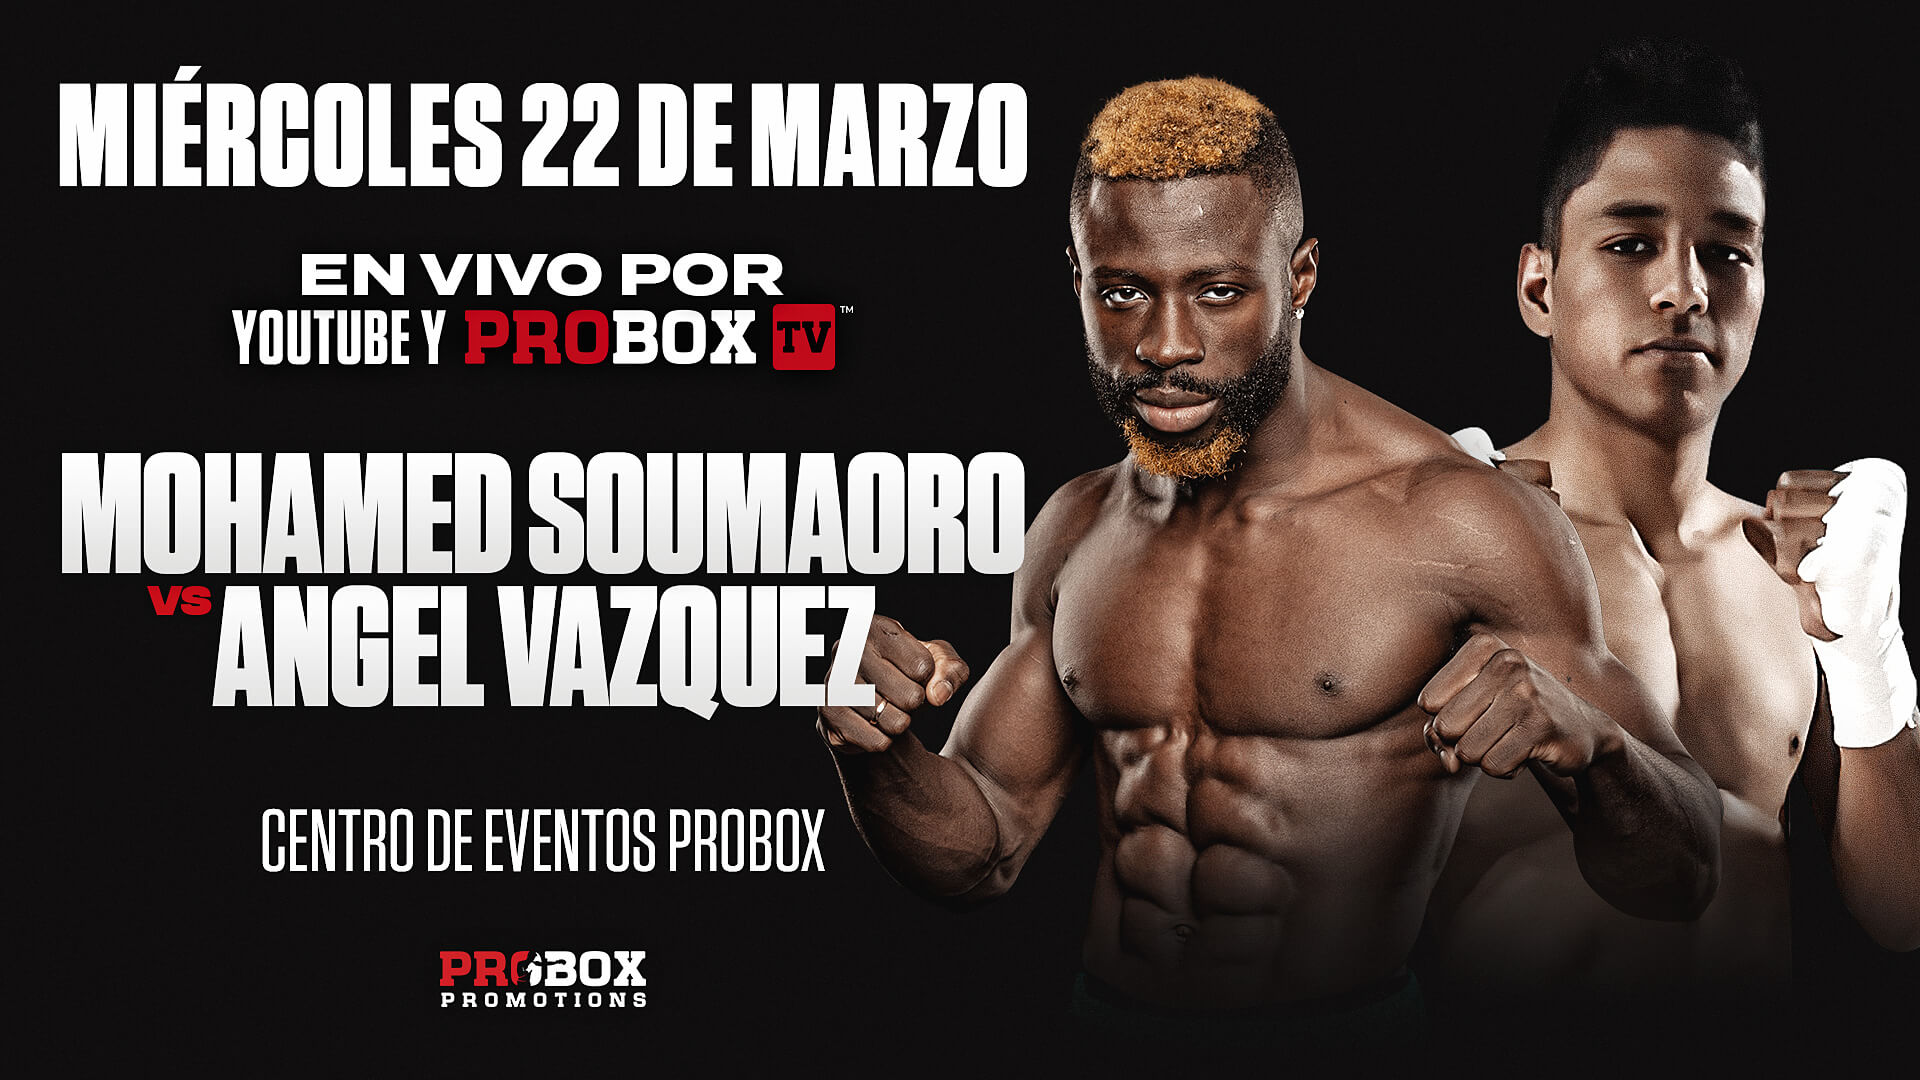 Ángel Vázquez se enfrenta a Mohamed Soumaoro, el 22 de marzo en directo por PROBOX TV